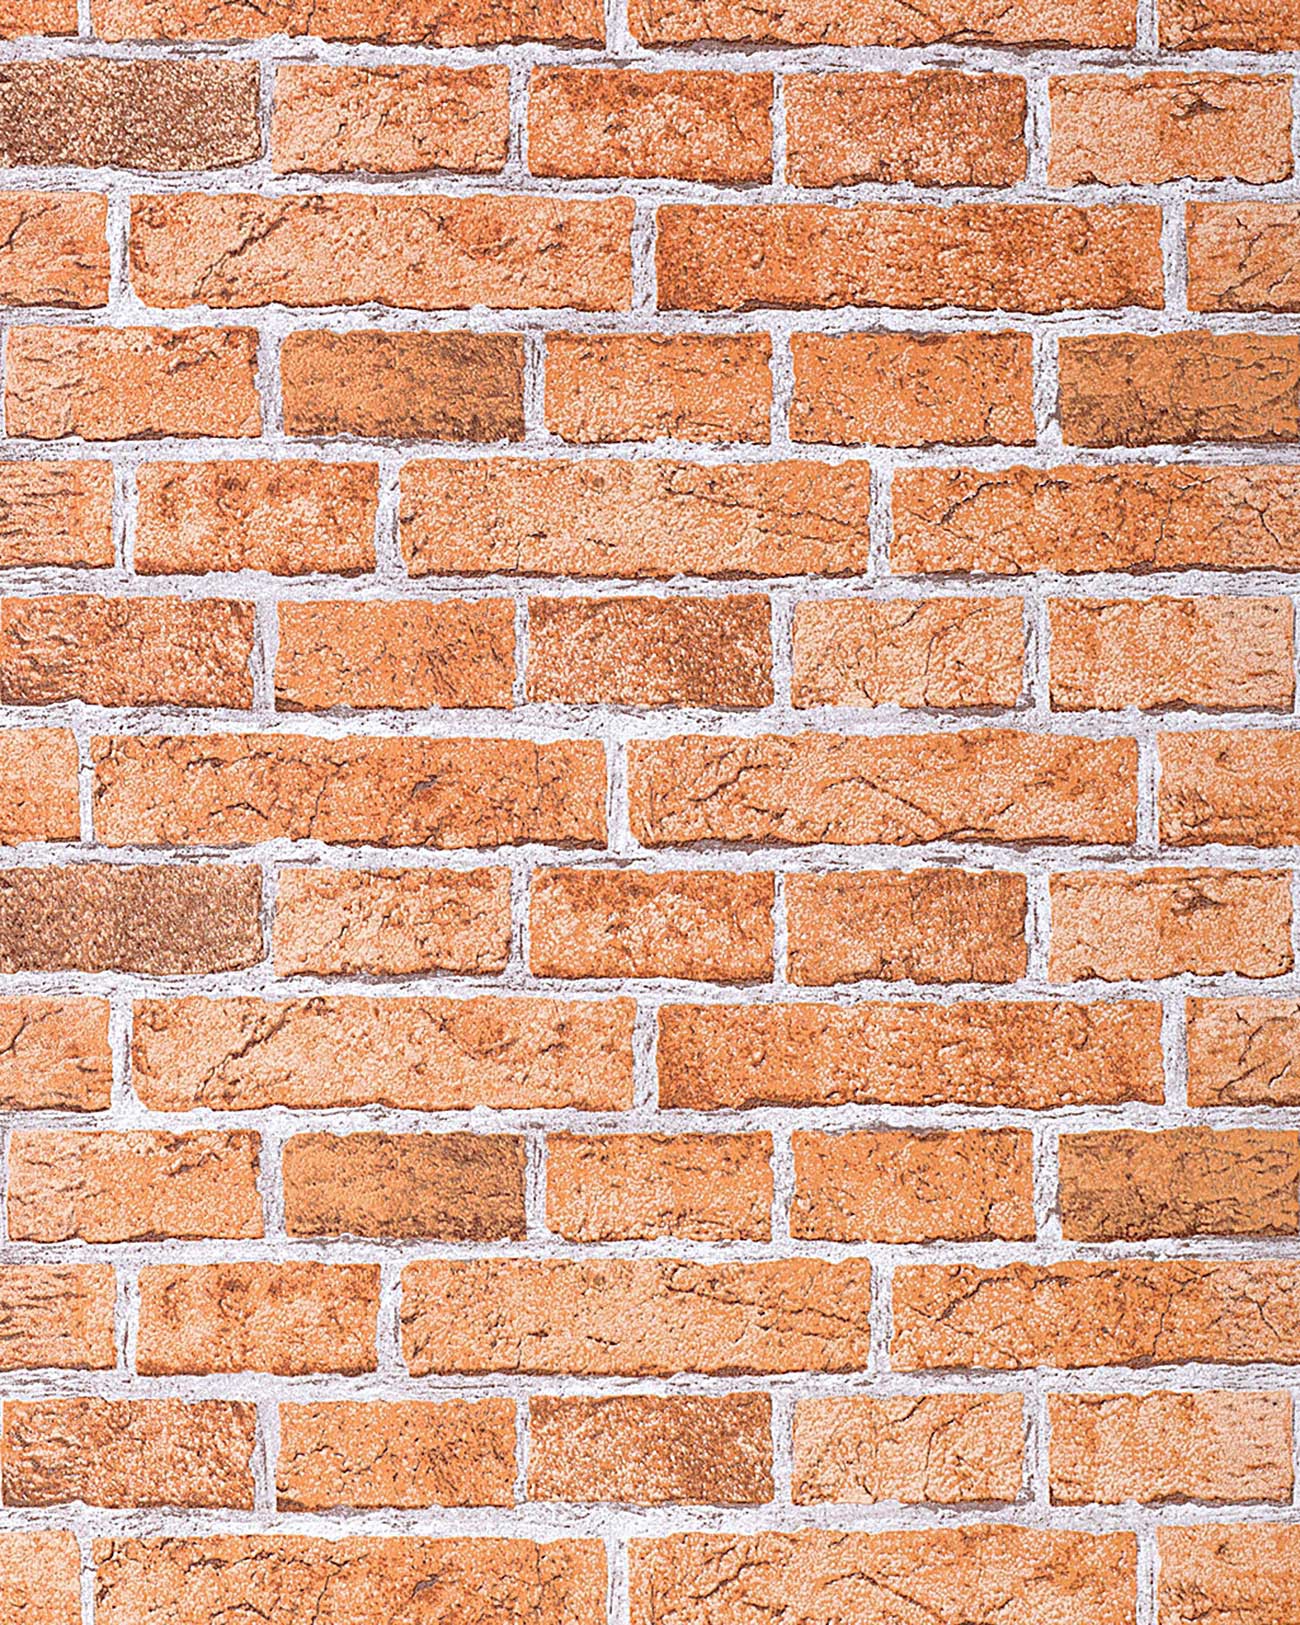 Rustic Design Brick Wallpaper Decor Vintage Stone Look Brown